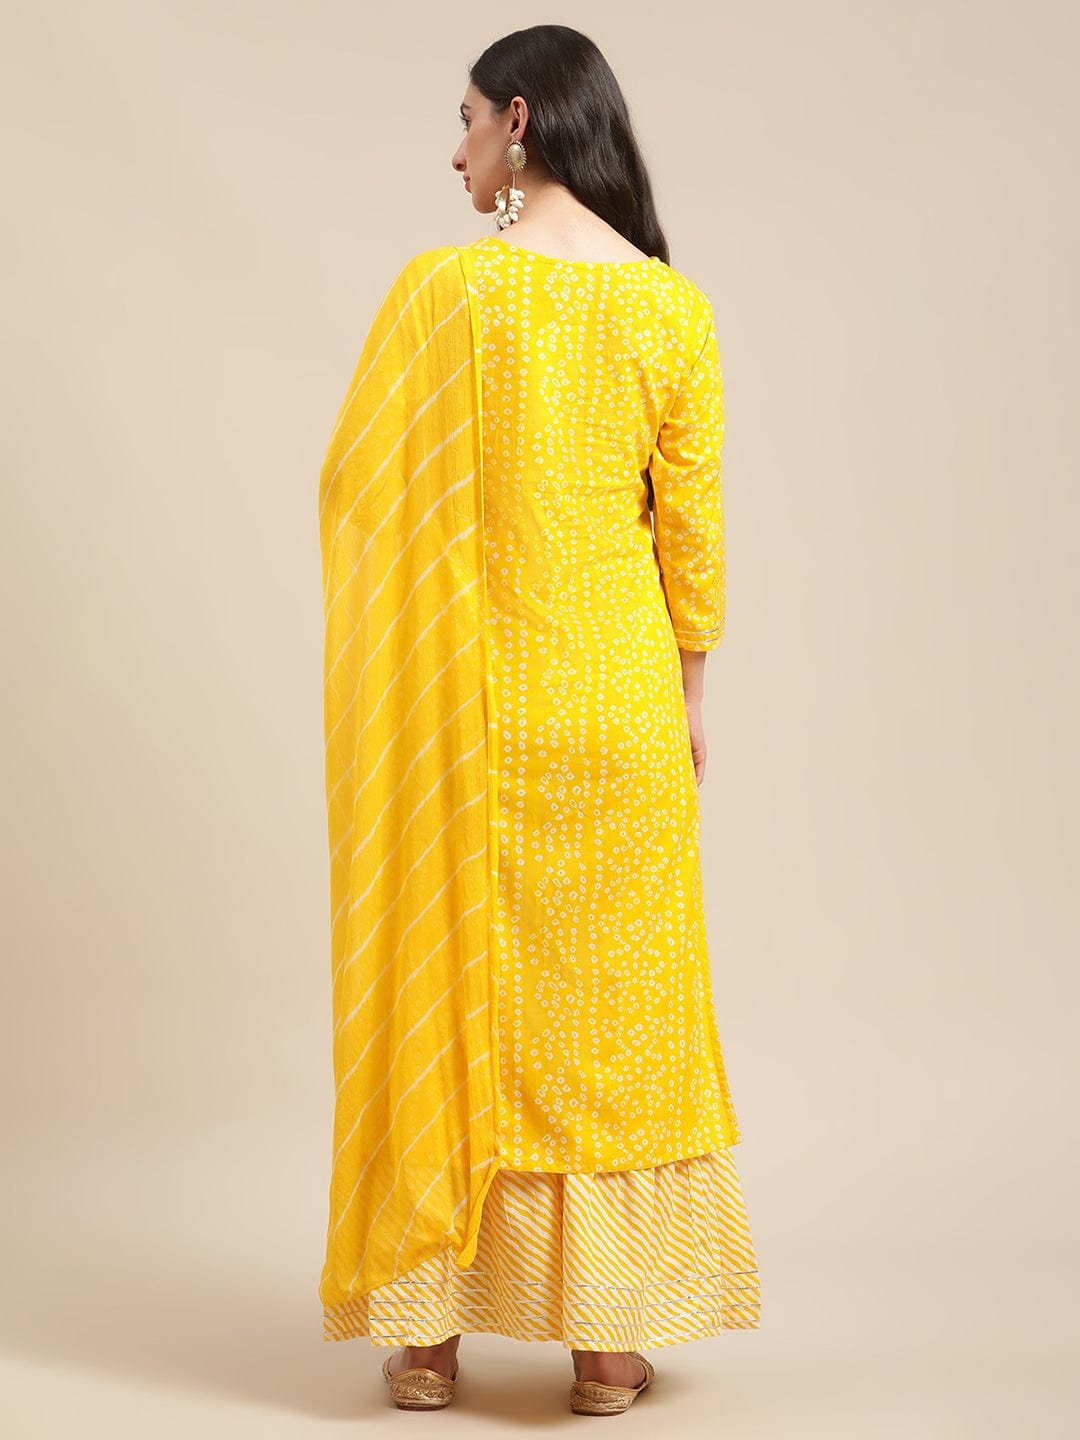 Women's Yellow And White Zari Embroidery Leheriya Kurta Sharara Set With Leheriya Dupatta. - Varanga